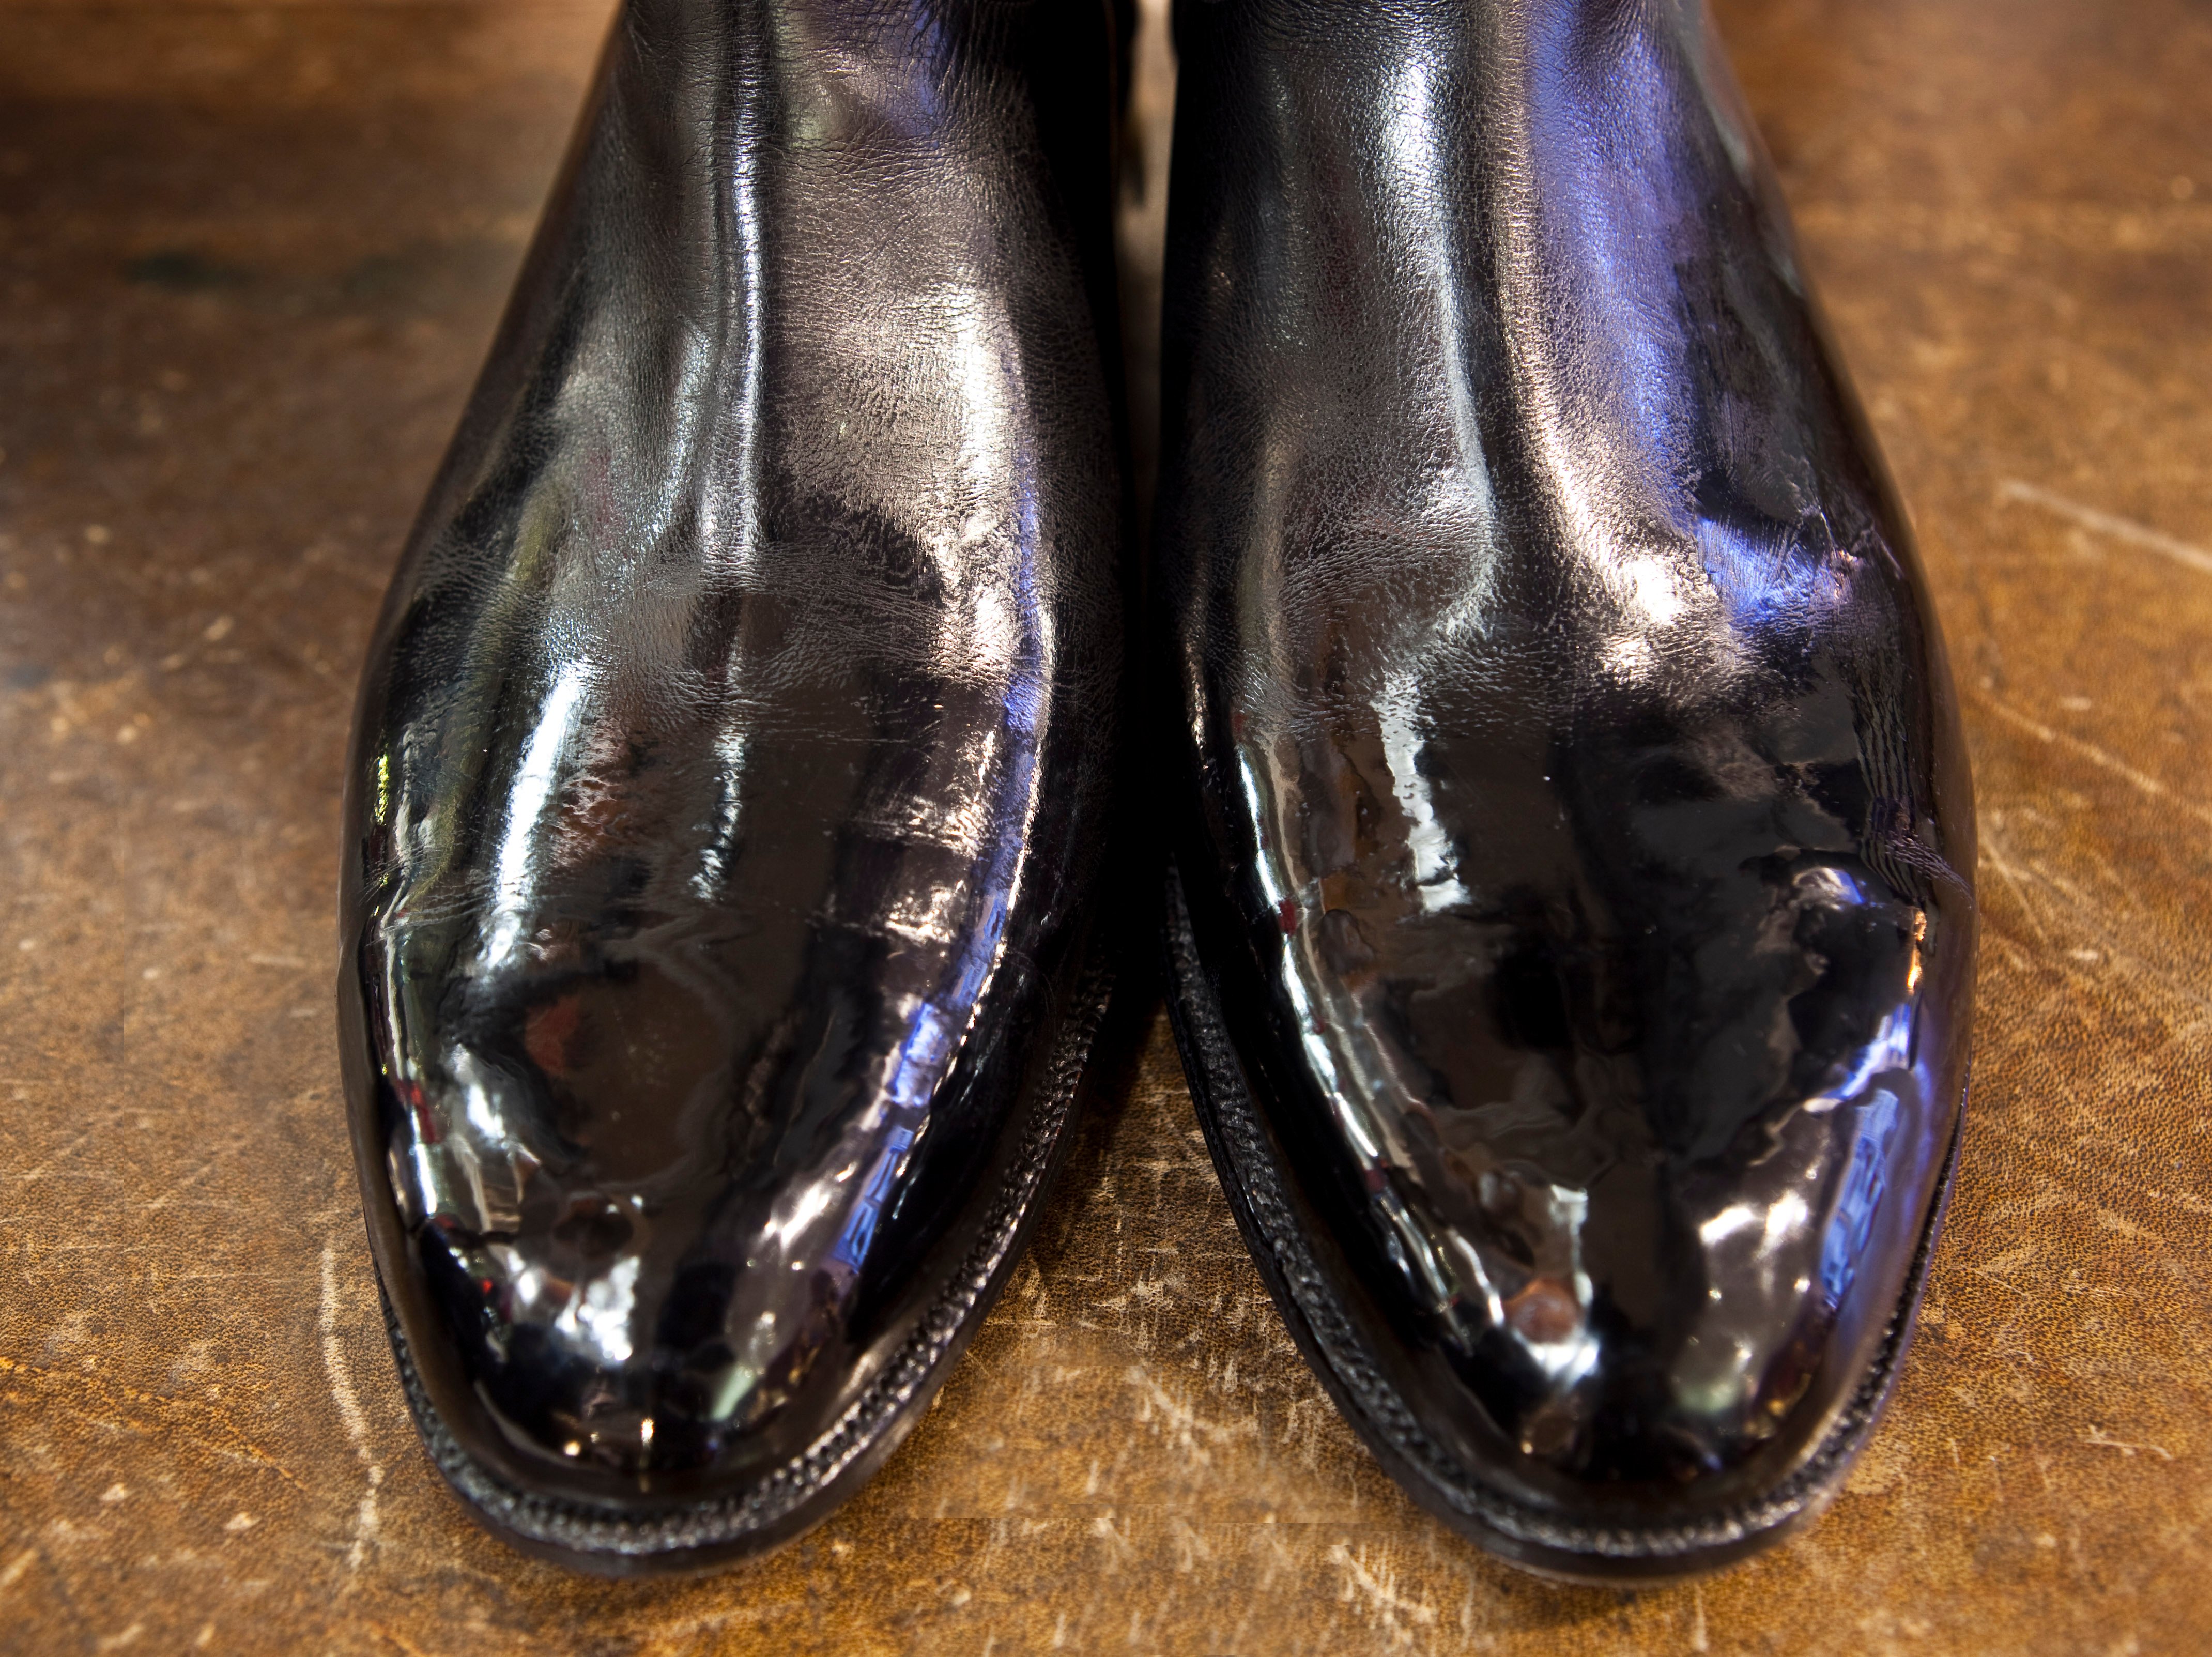 Shoe Shining - Tips & Tricks - The Shoe Snob BlogThe Shoe Snob Blog